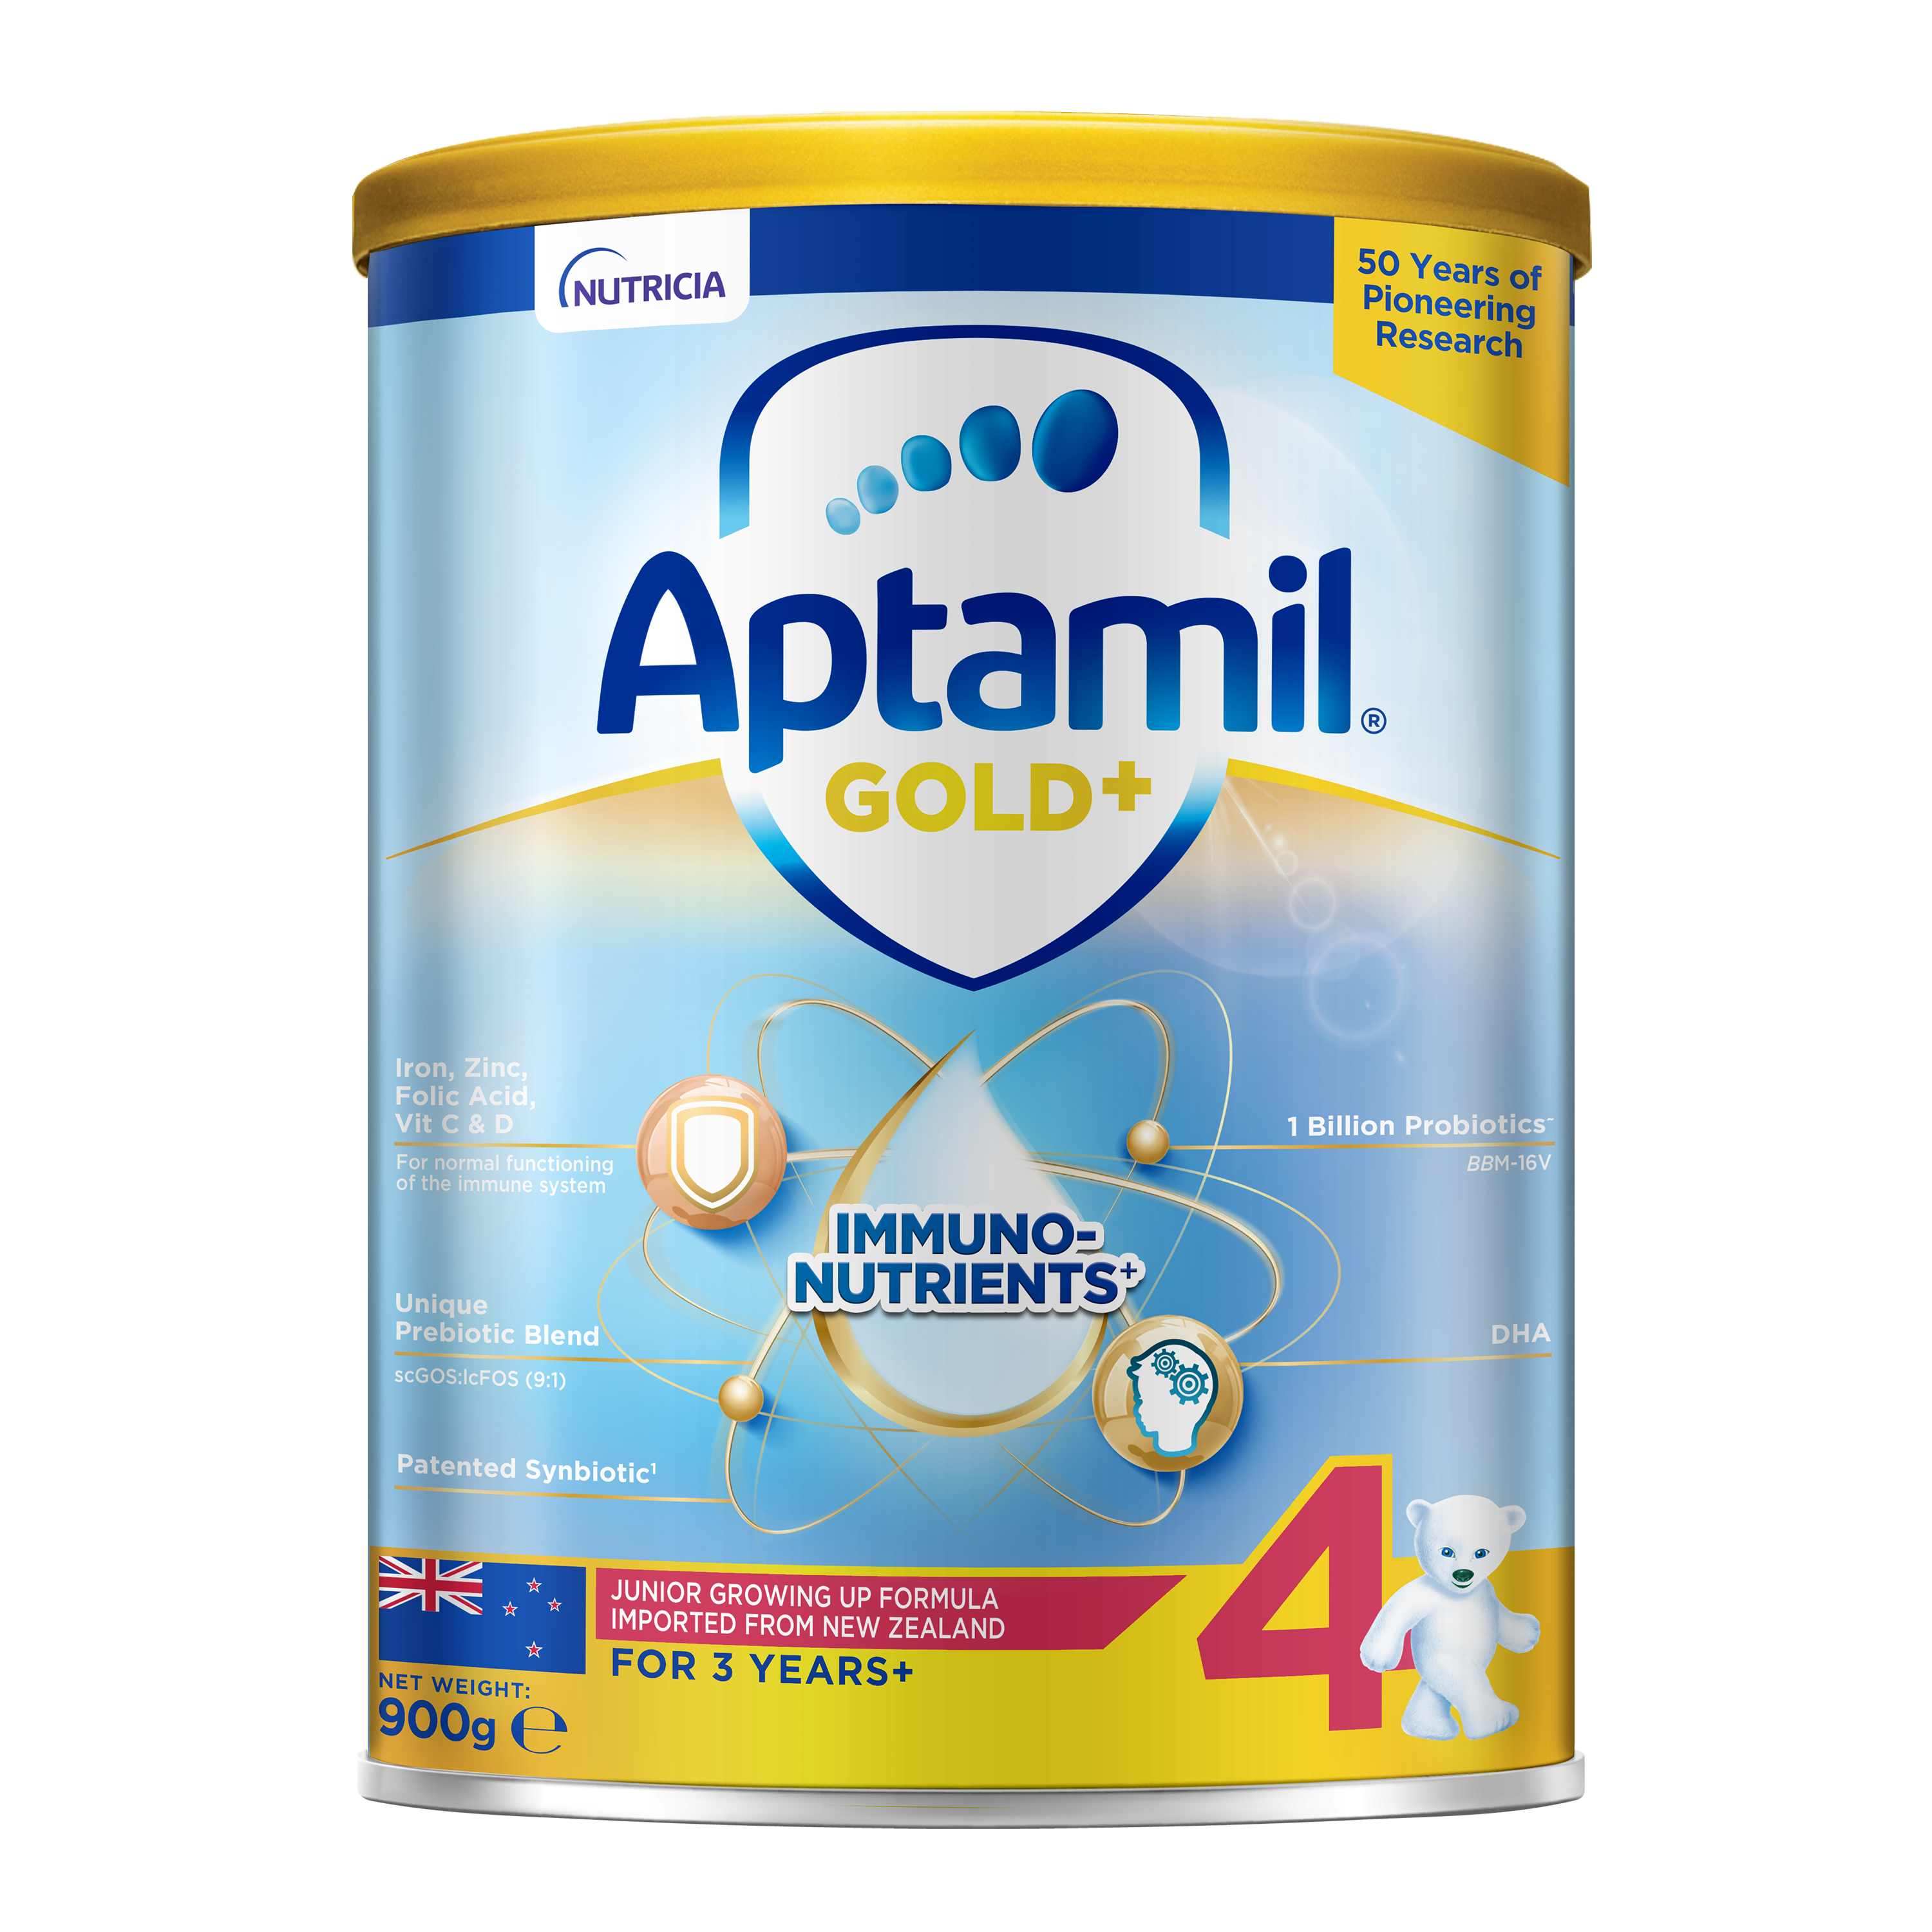 Aptamil® Growing Up Milk with Immuno-Nutrients (Stage 4)